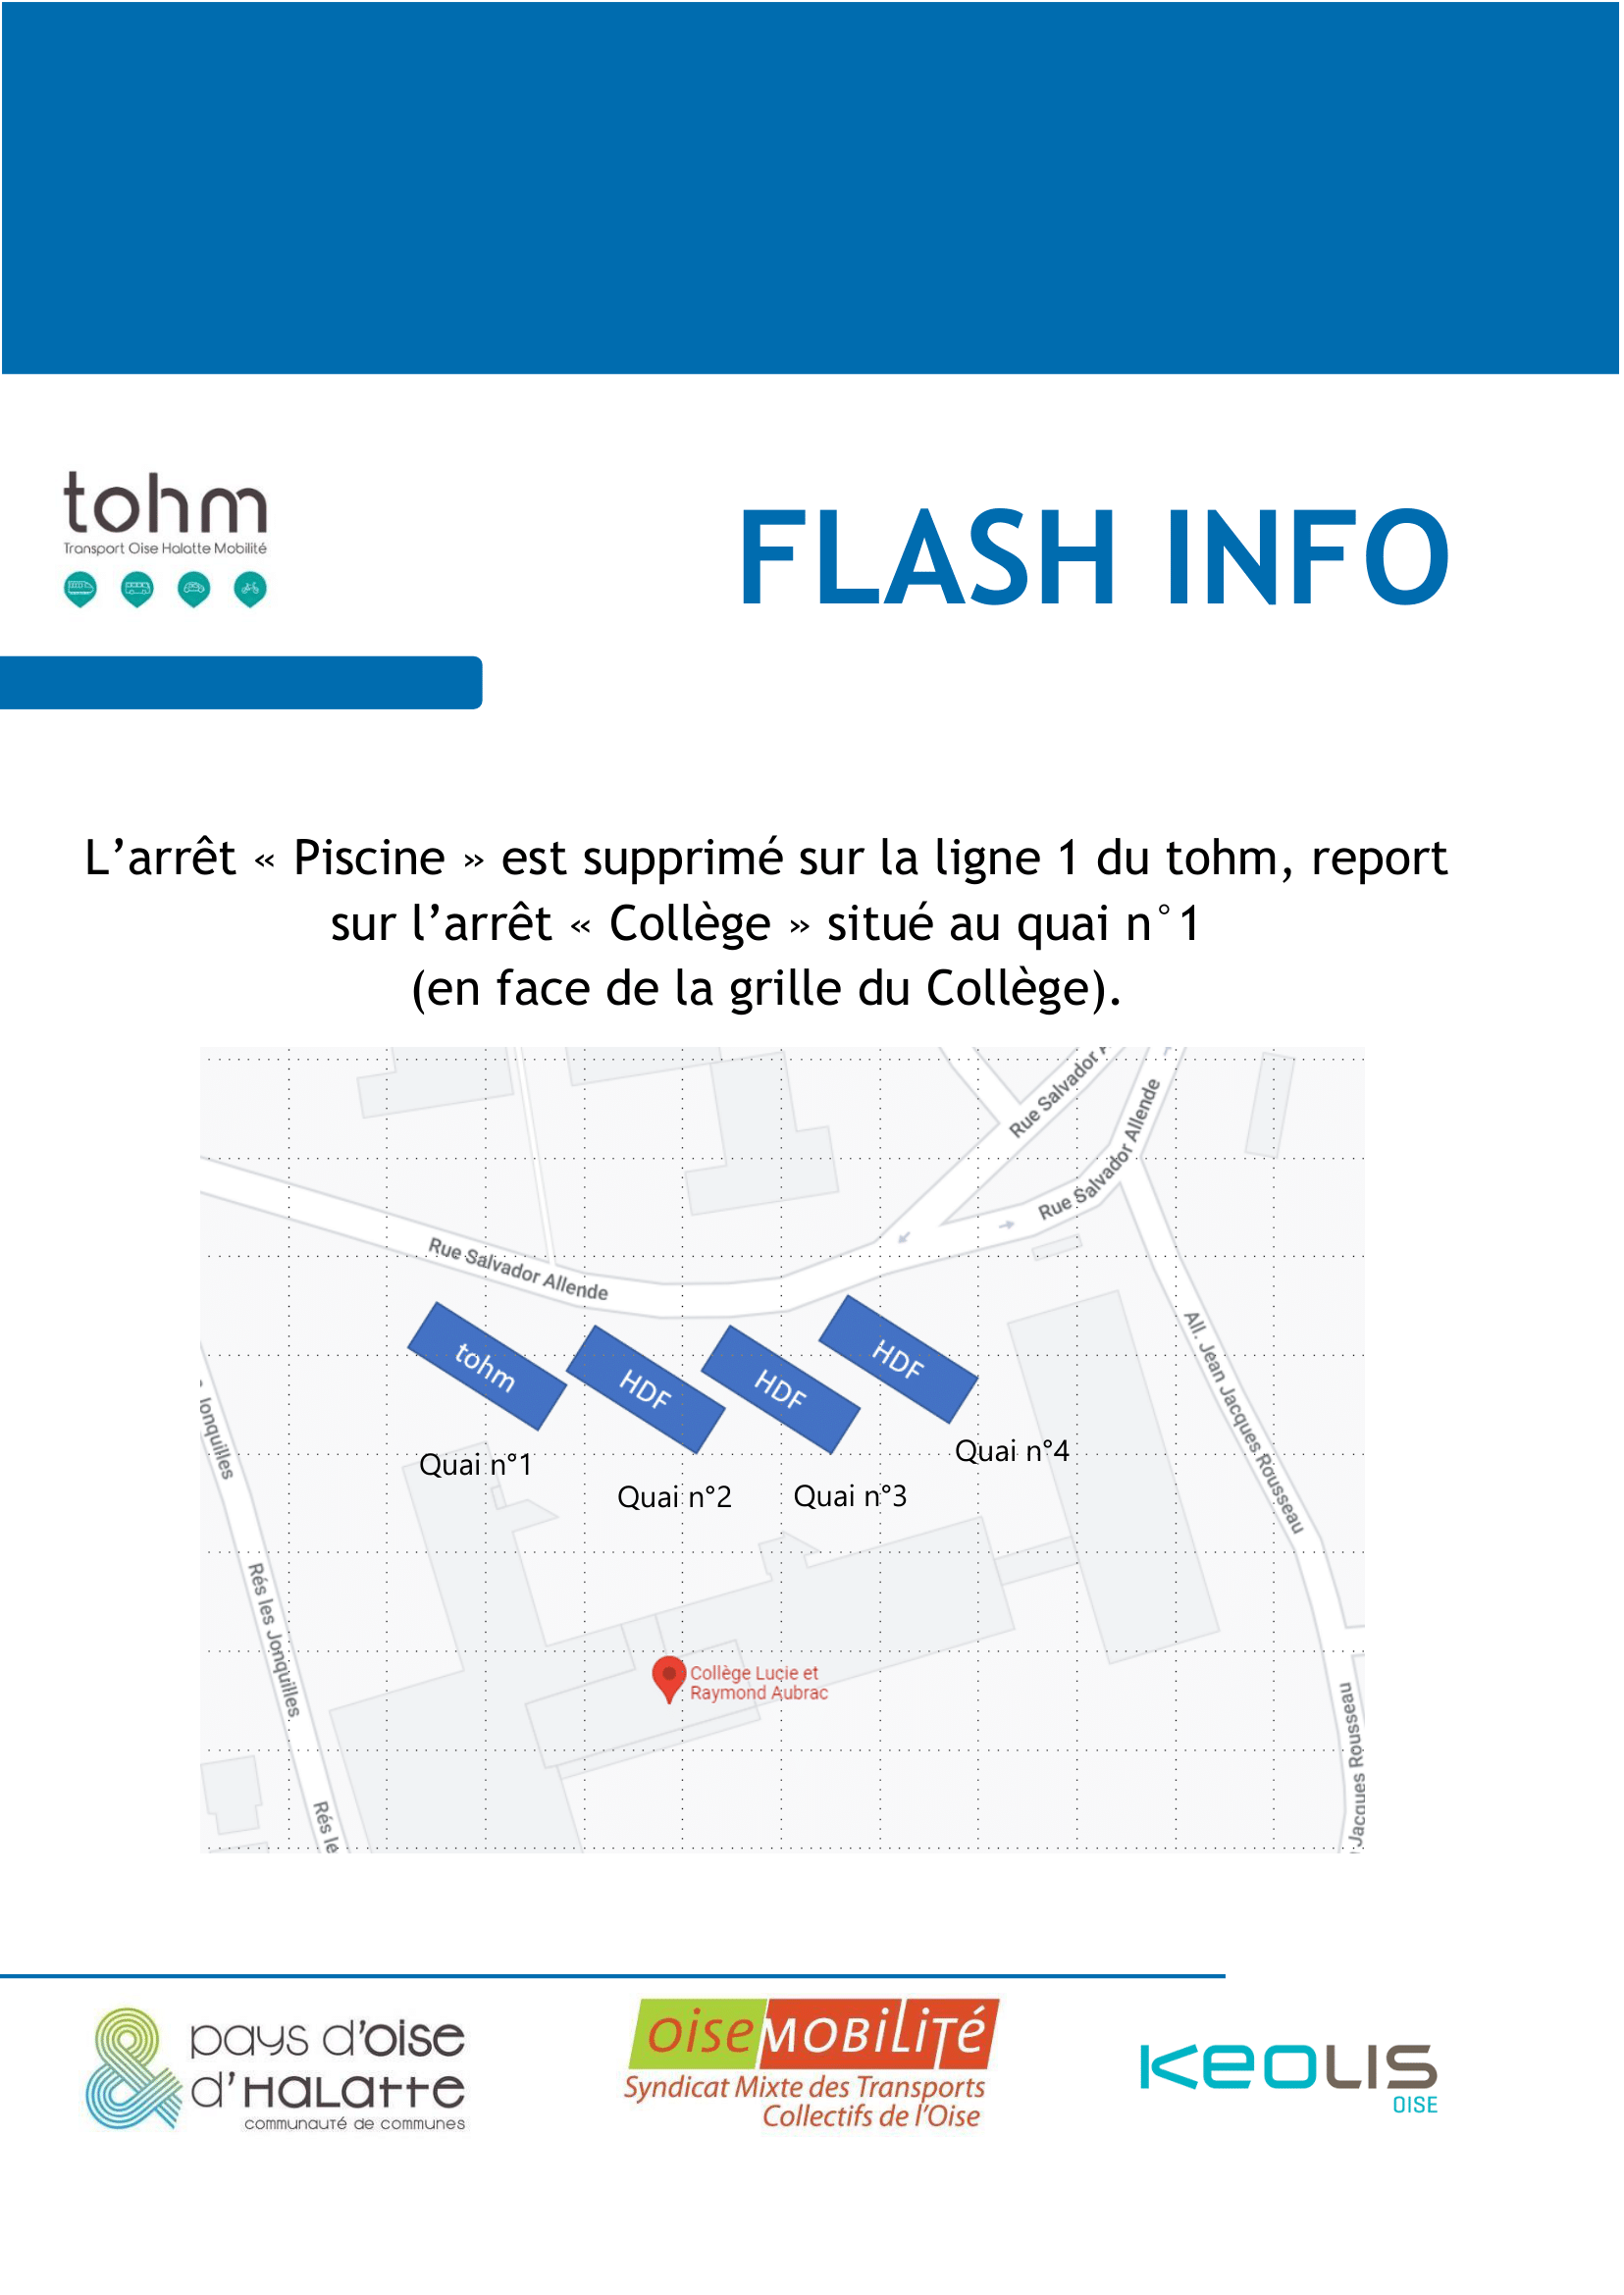 flash info